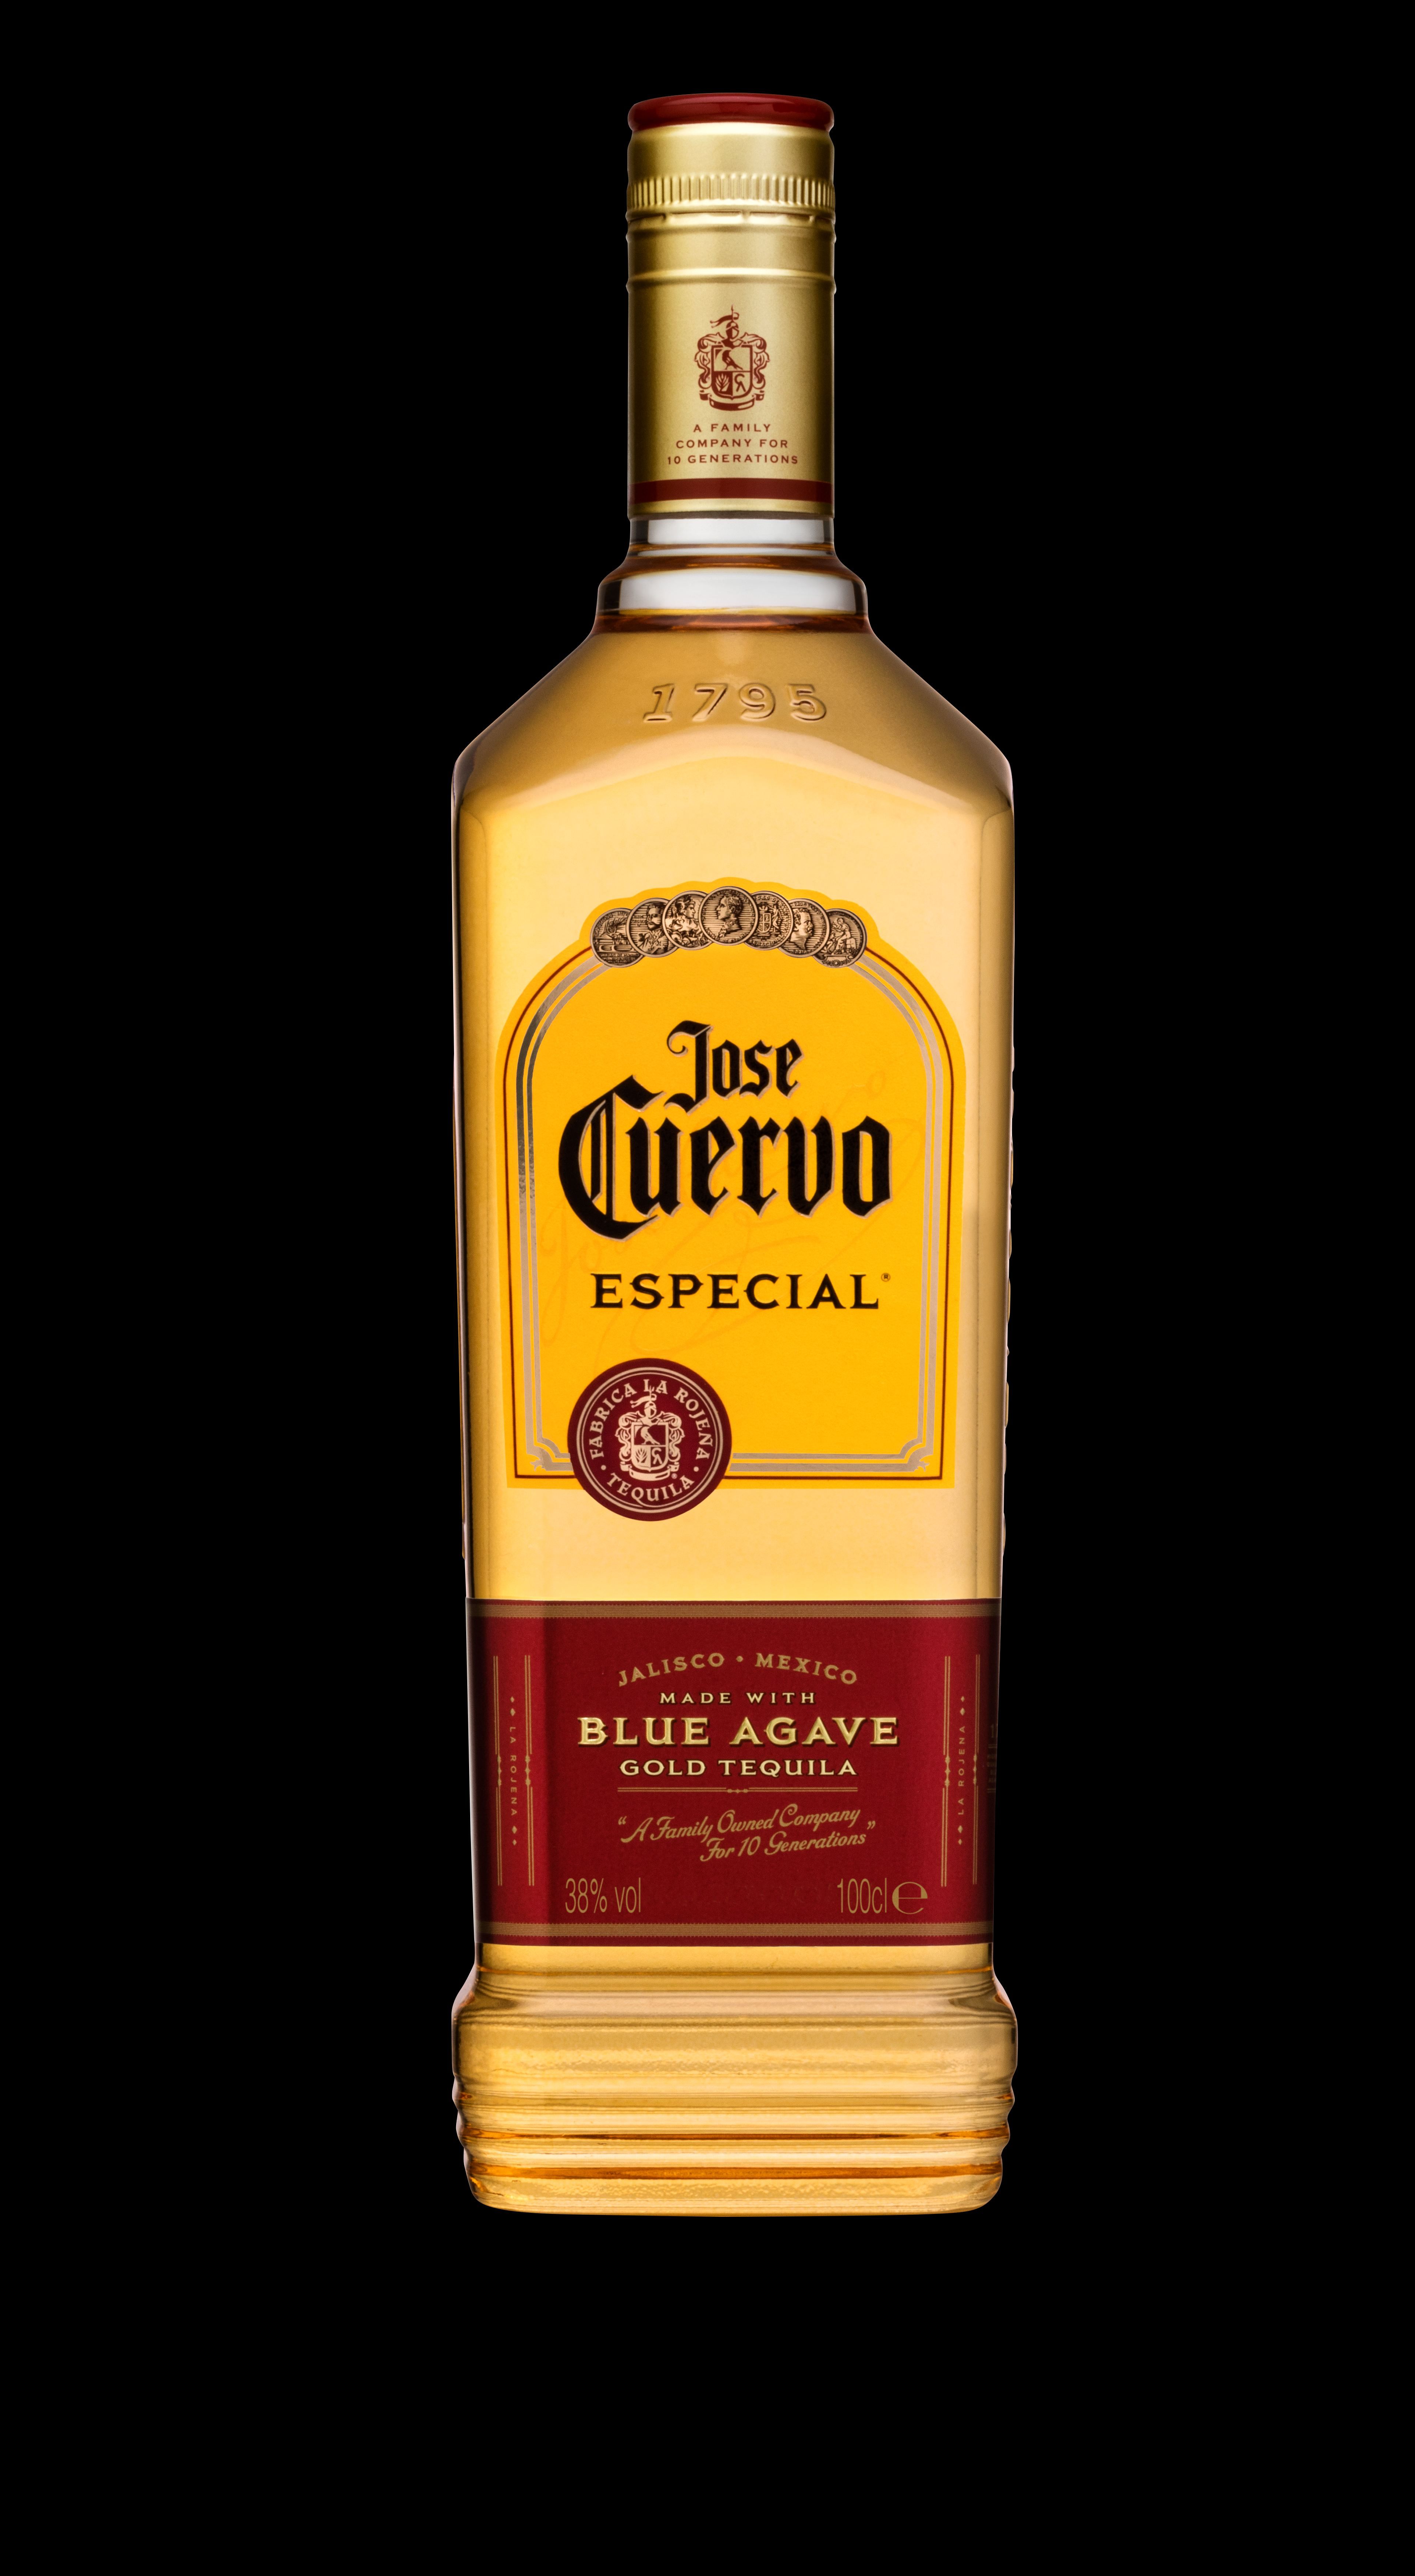 Tequila jose cuervo Jose Cuervo